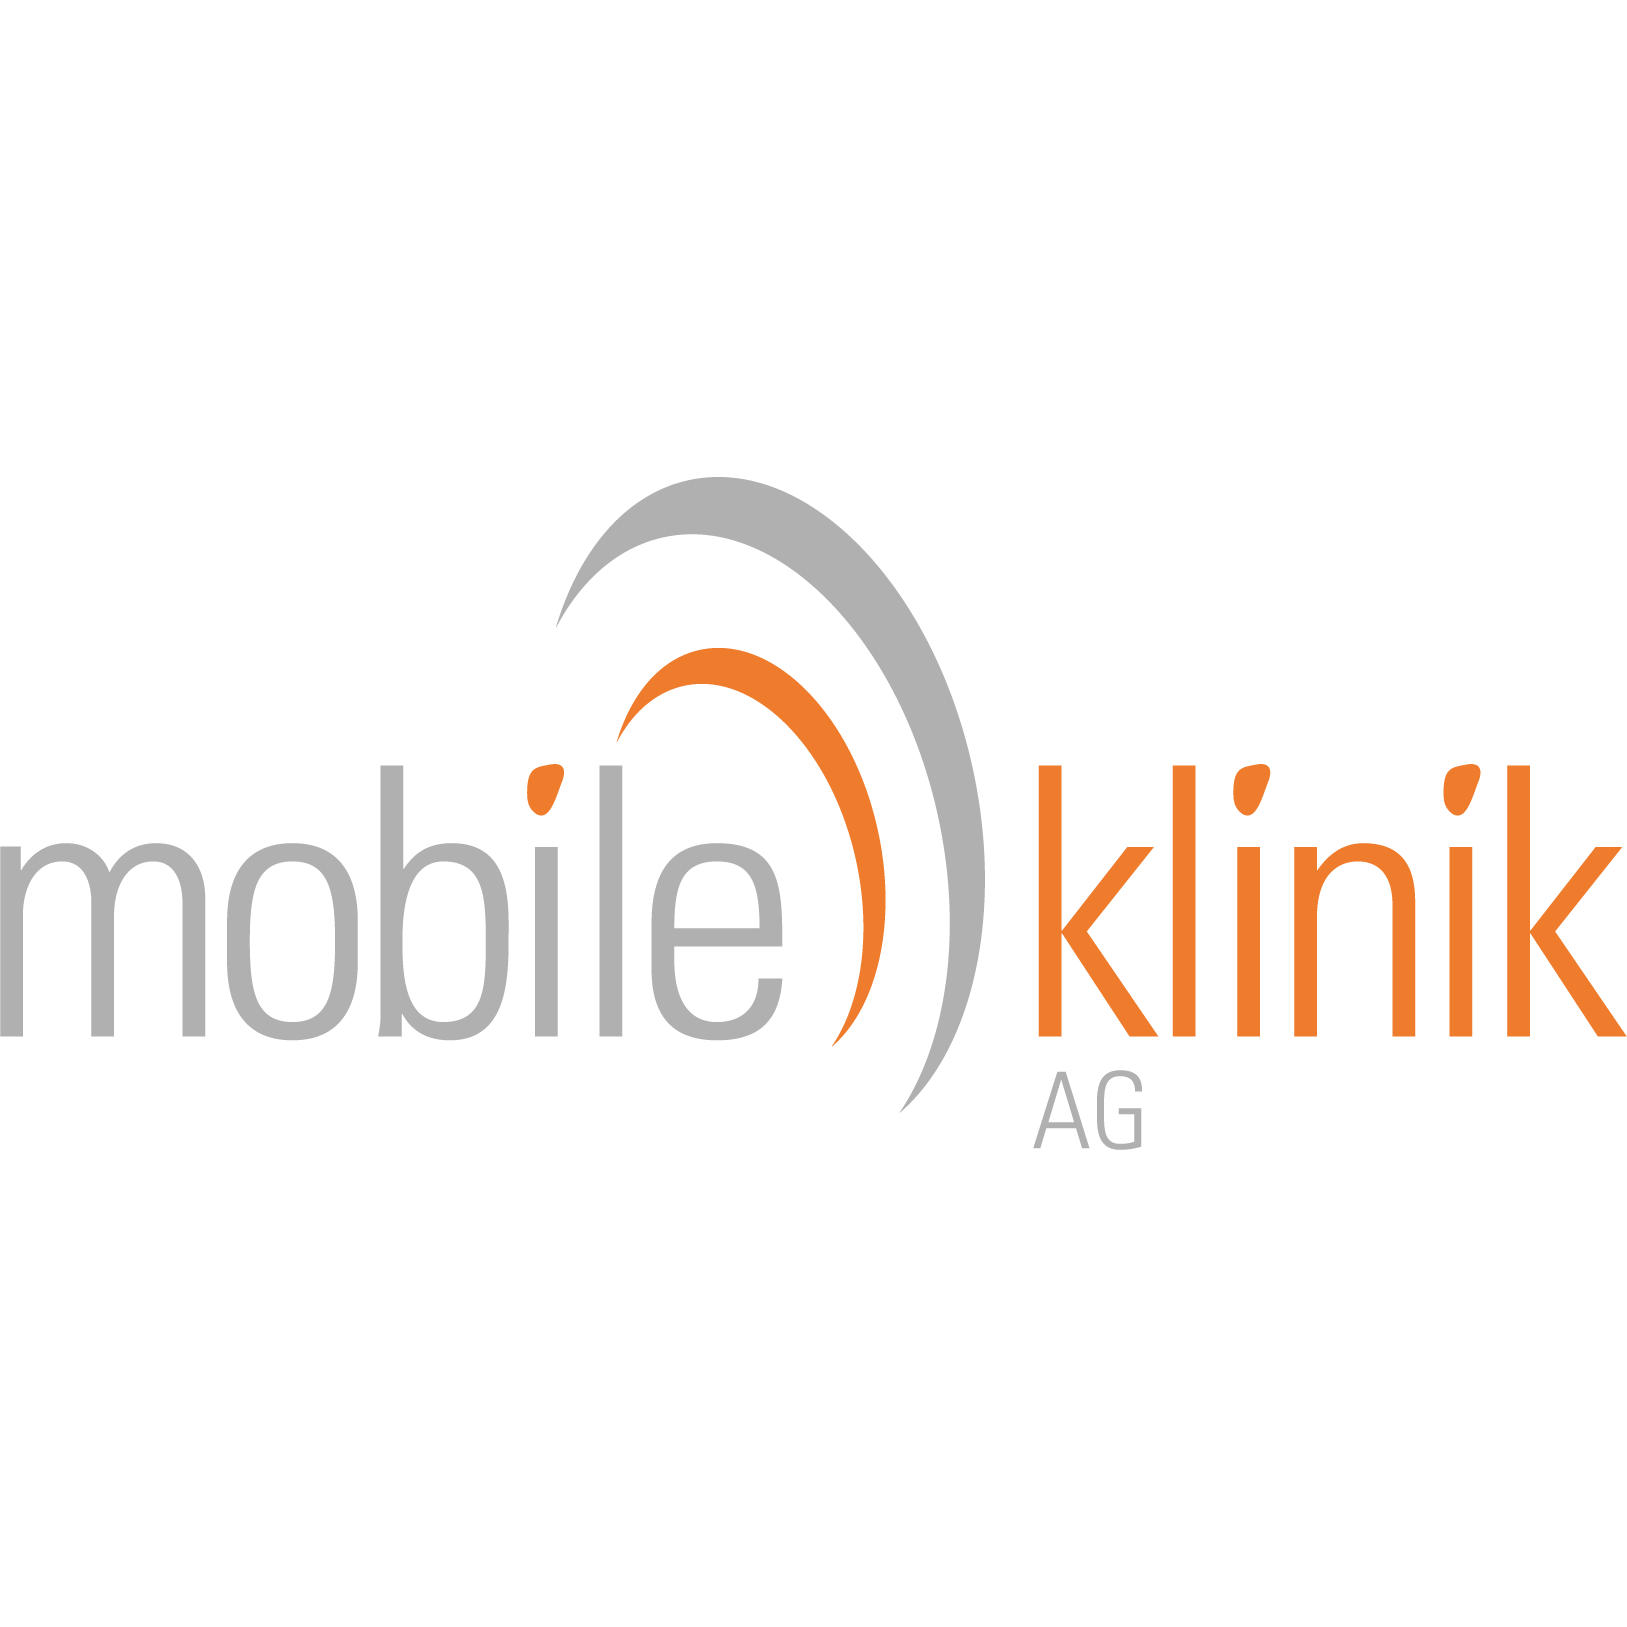 Mobile Klinik AG Logo